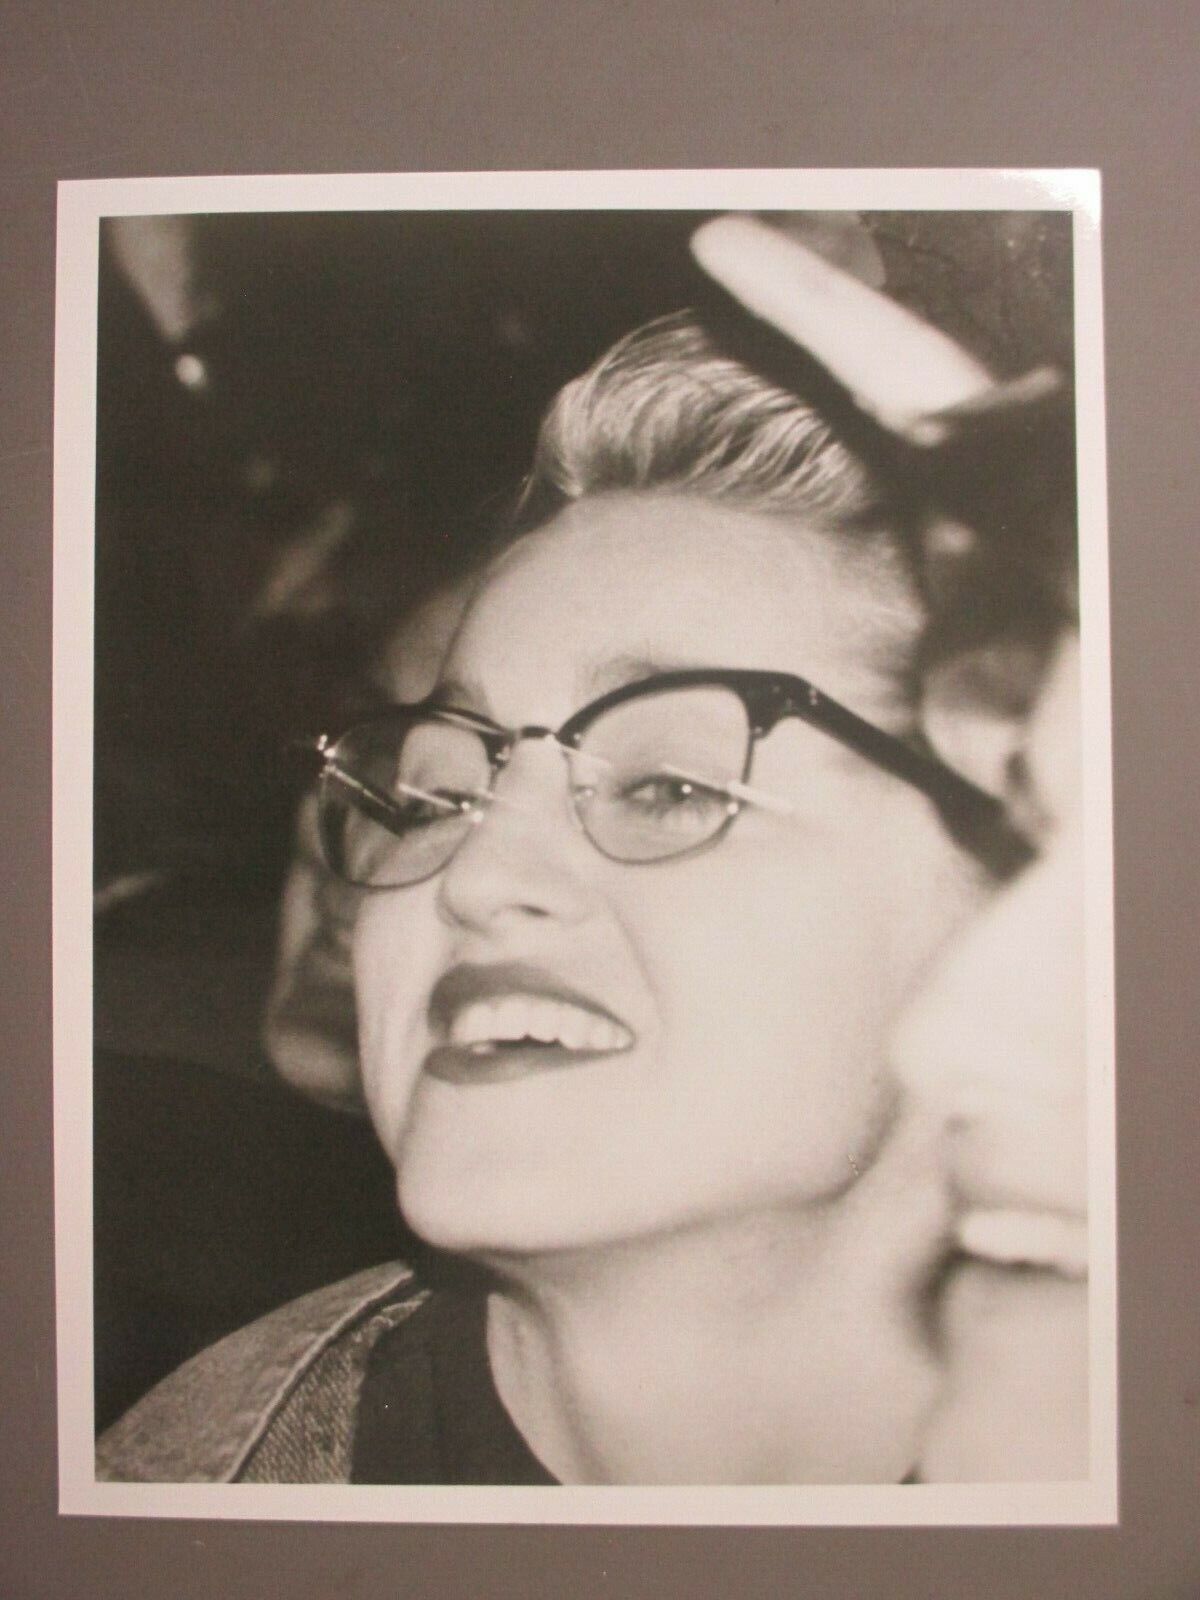 Madonna Black & White 8 X 10 Glossy Promo Photo Original Wearing Glasses !